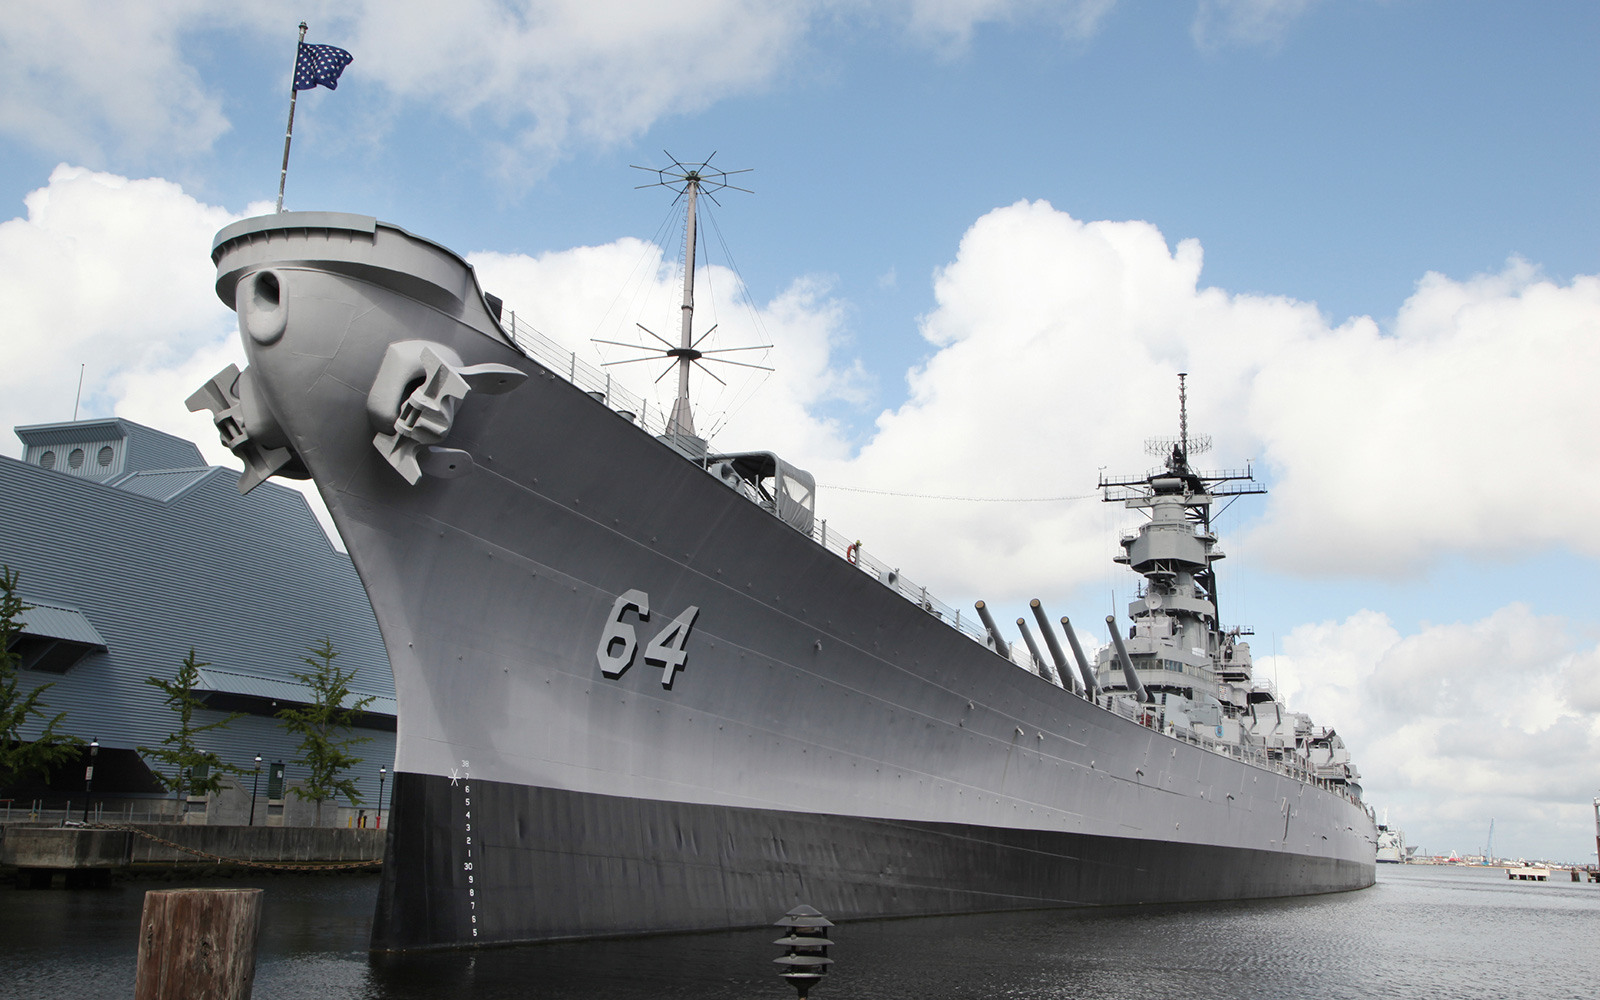 Large Navy battleship sitting dockside in water below a blue sky